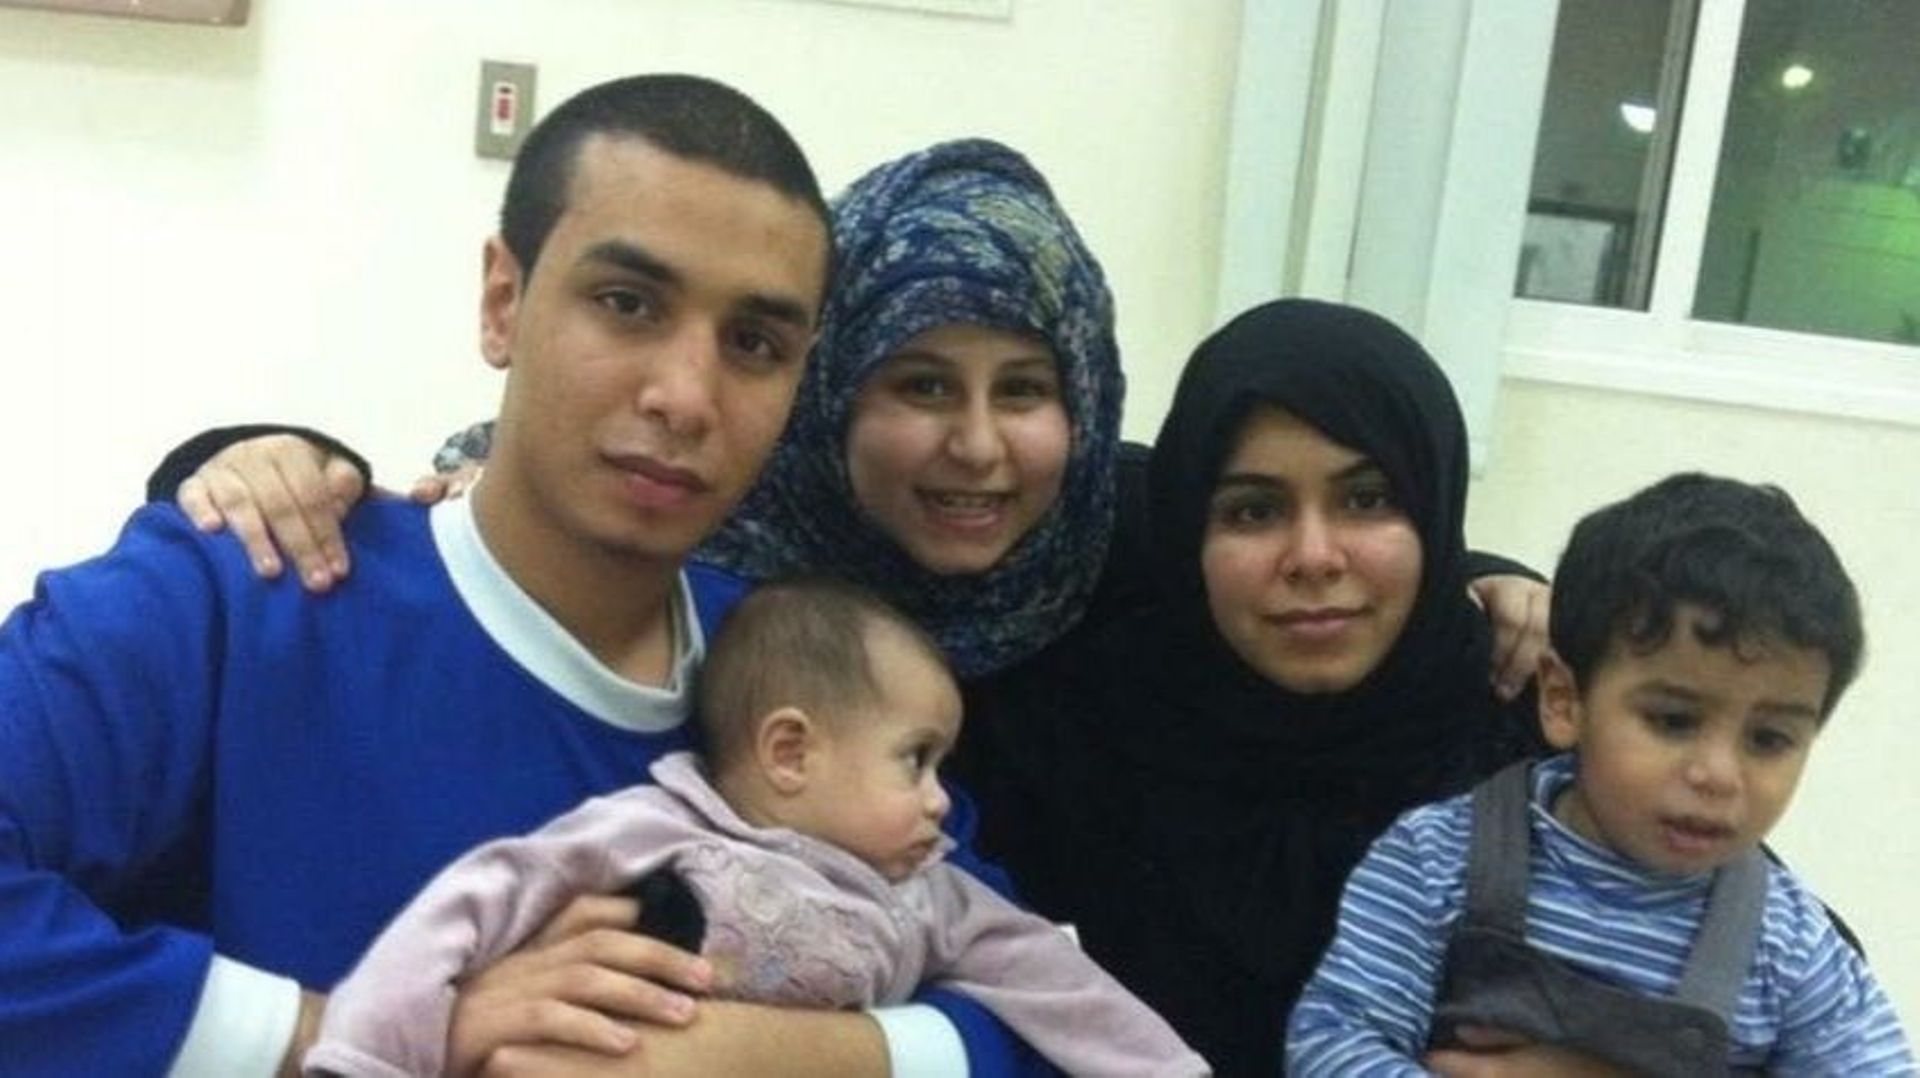 Ali al-Nimr et ses sœurs avant son arrestation